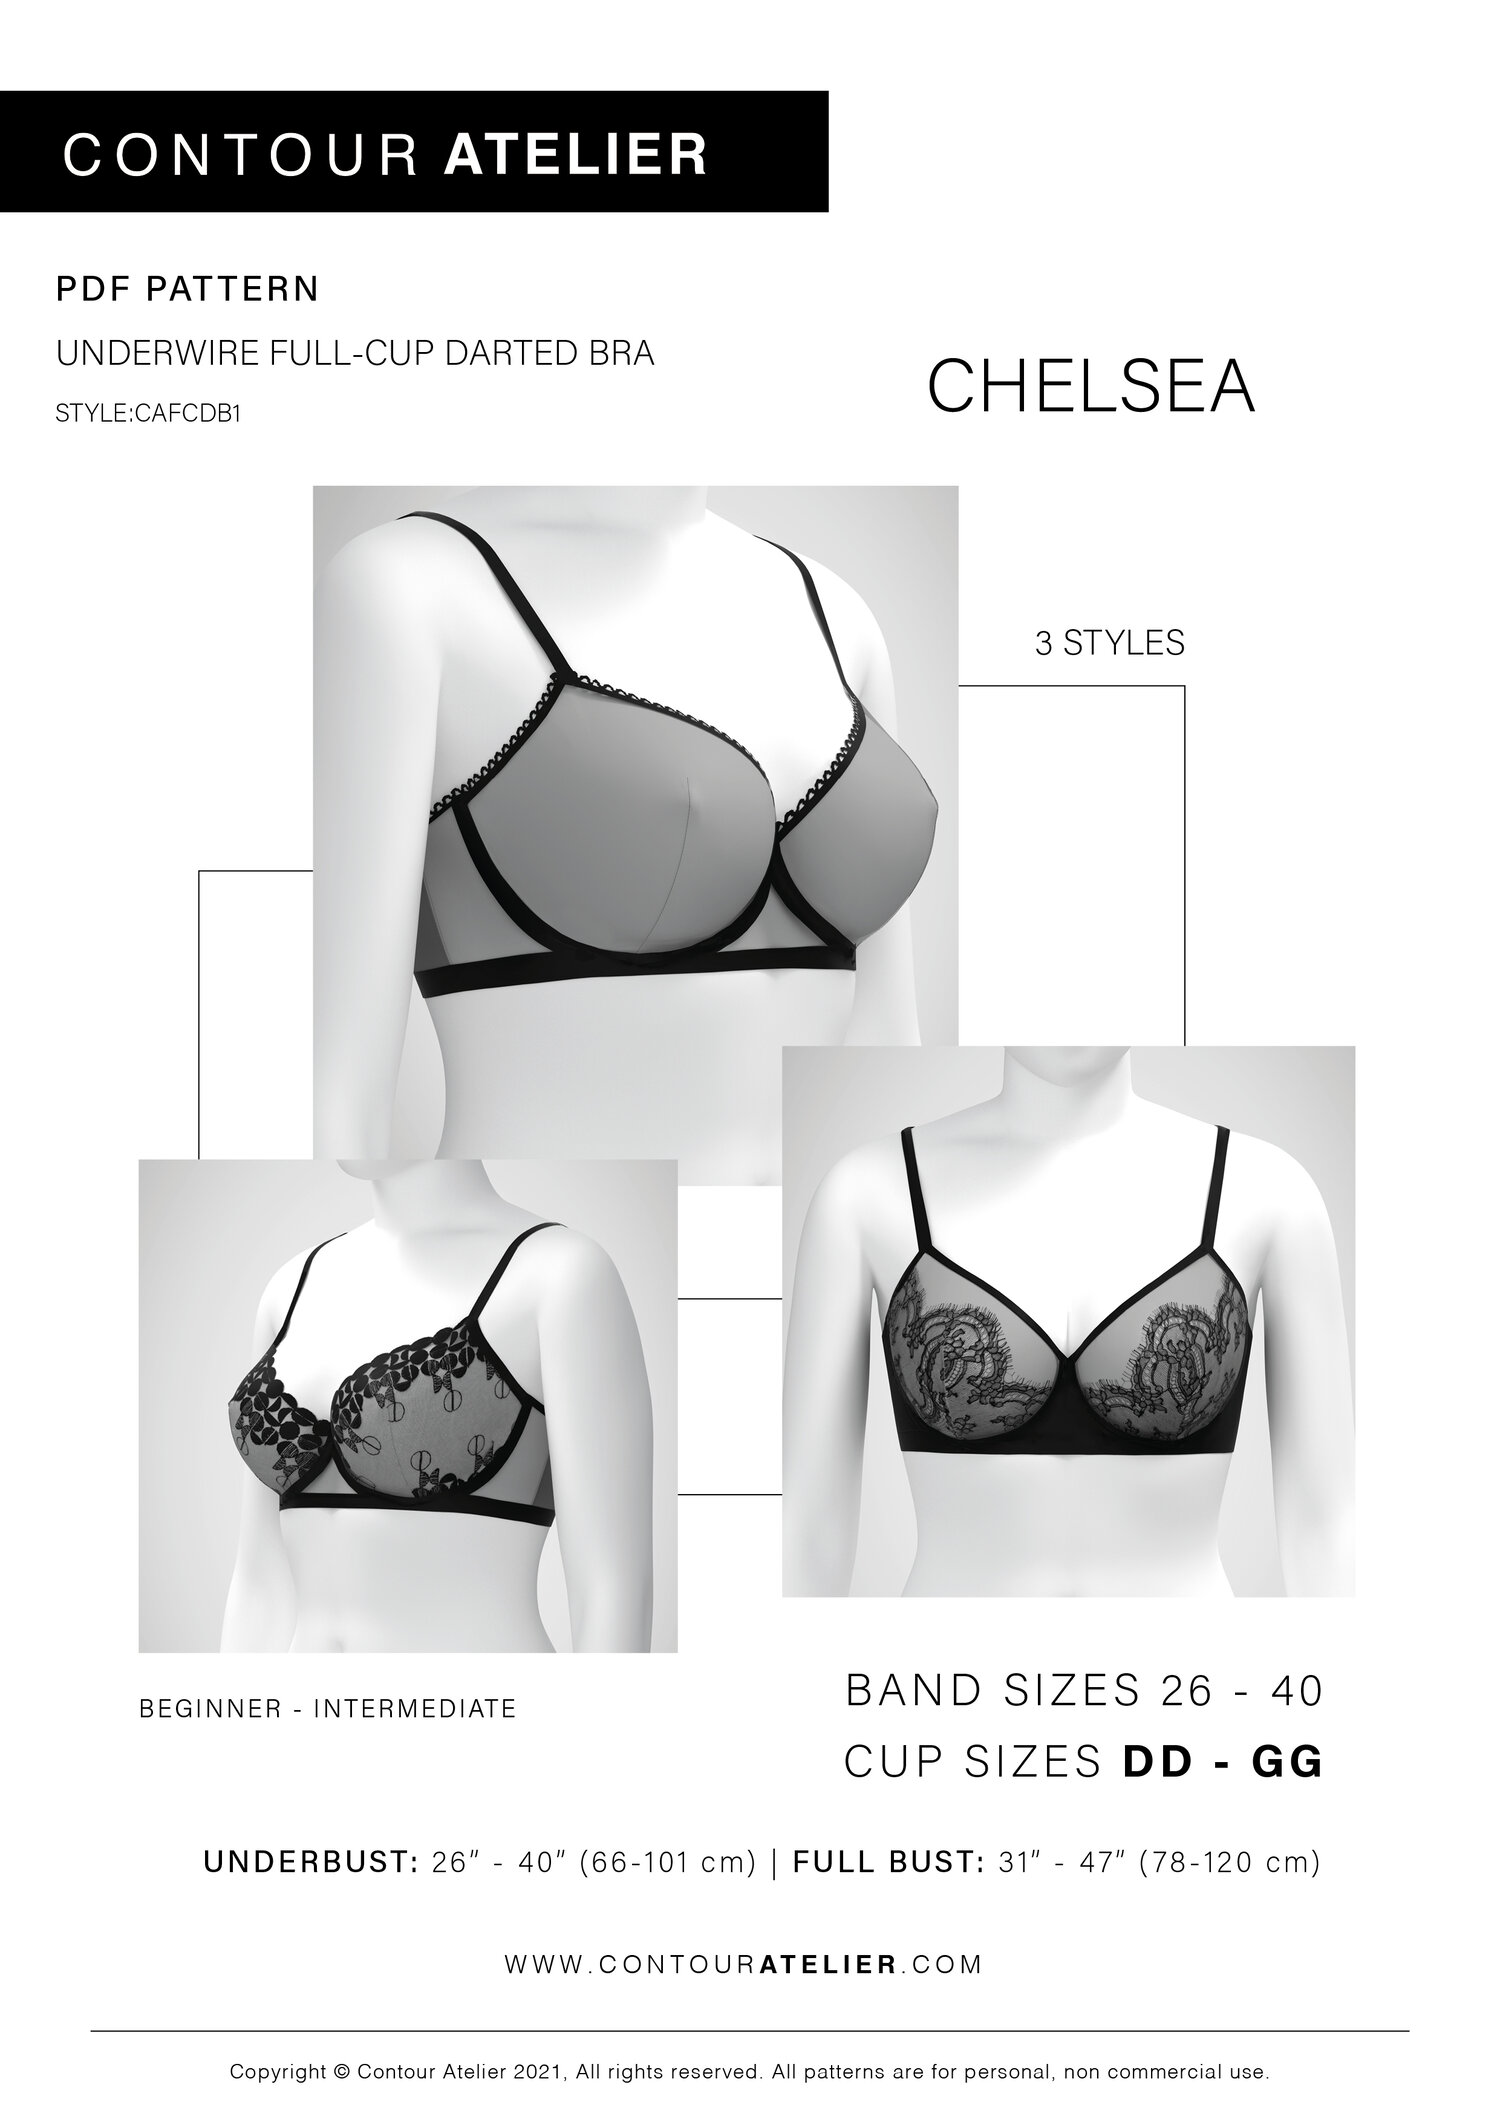 Chelsea Bra PDF Sewing Pattern - Sizes DD - GG — Contour Atelier